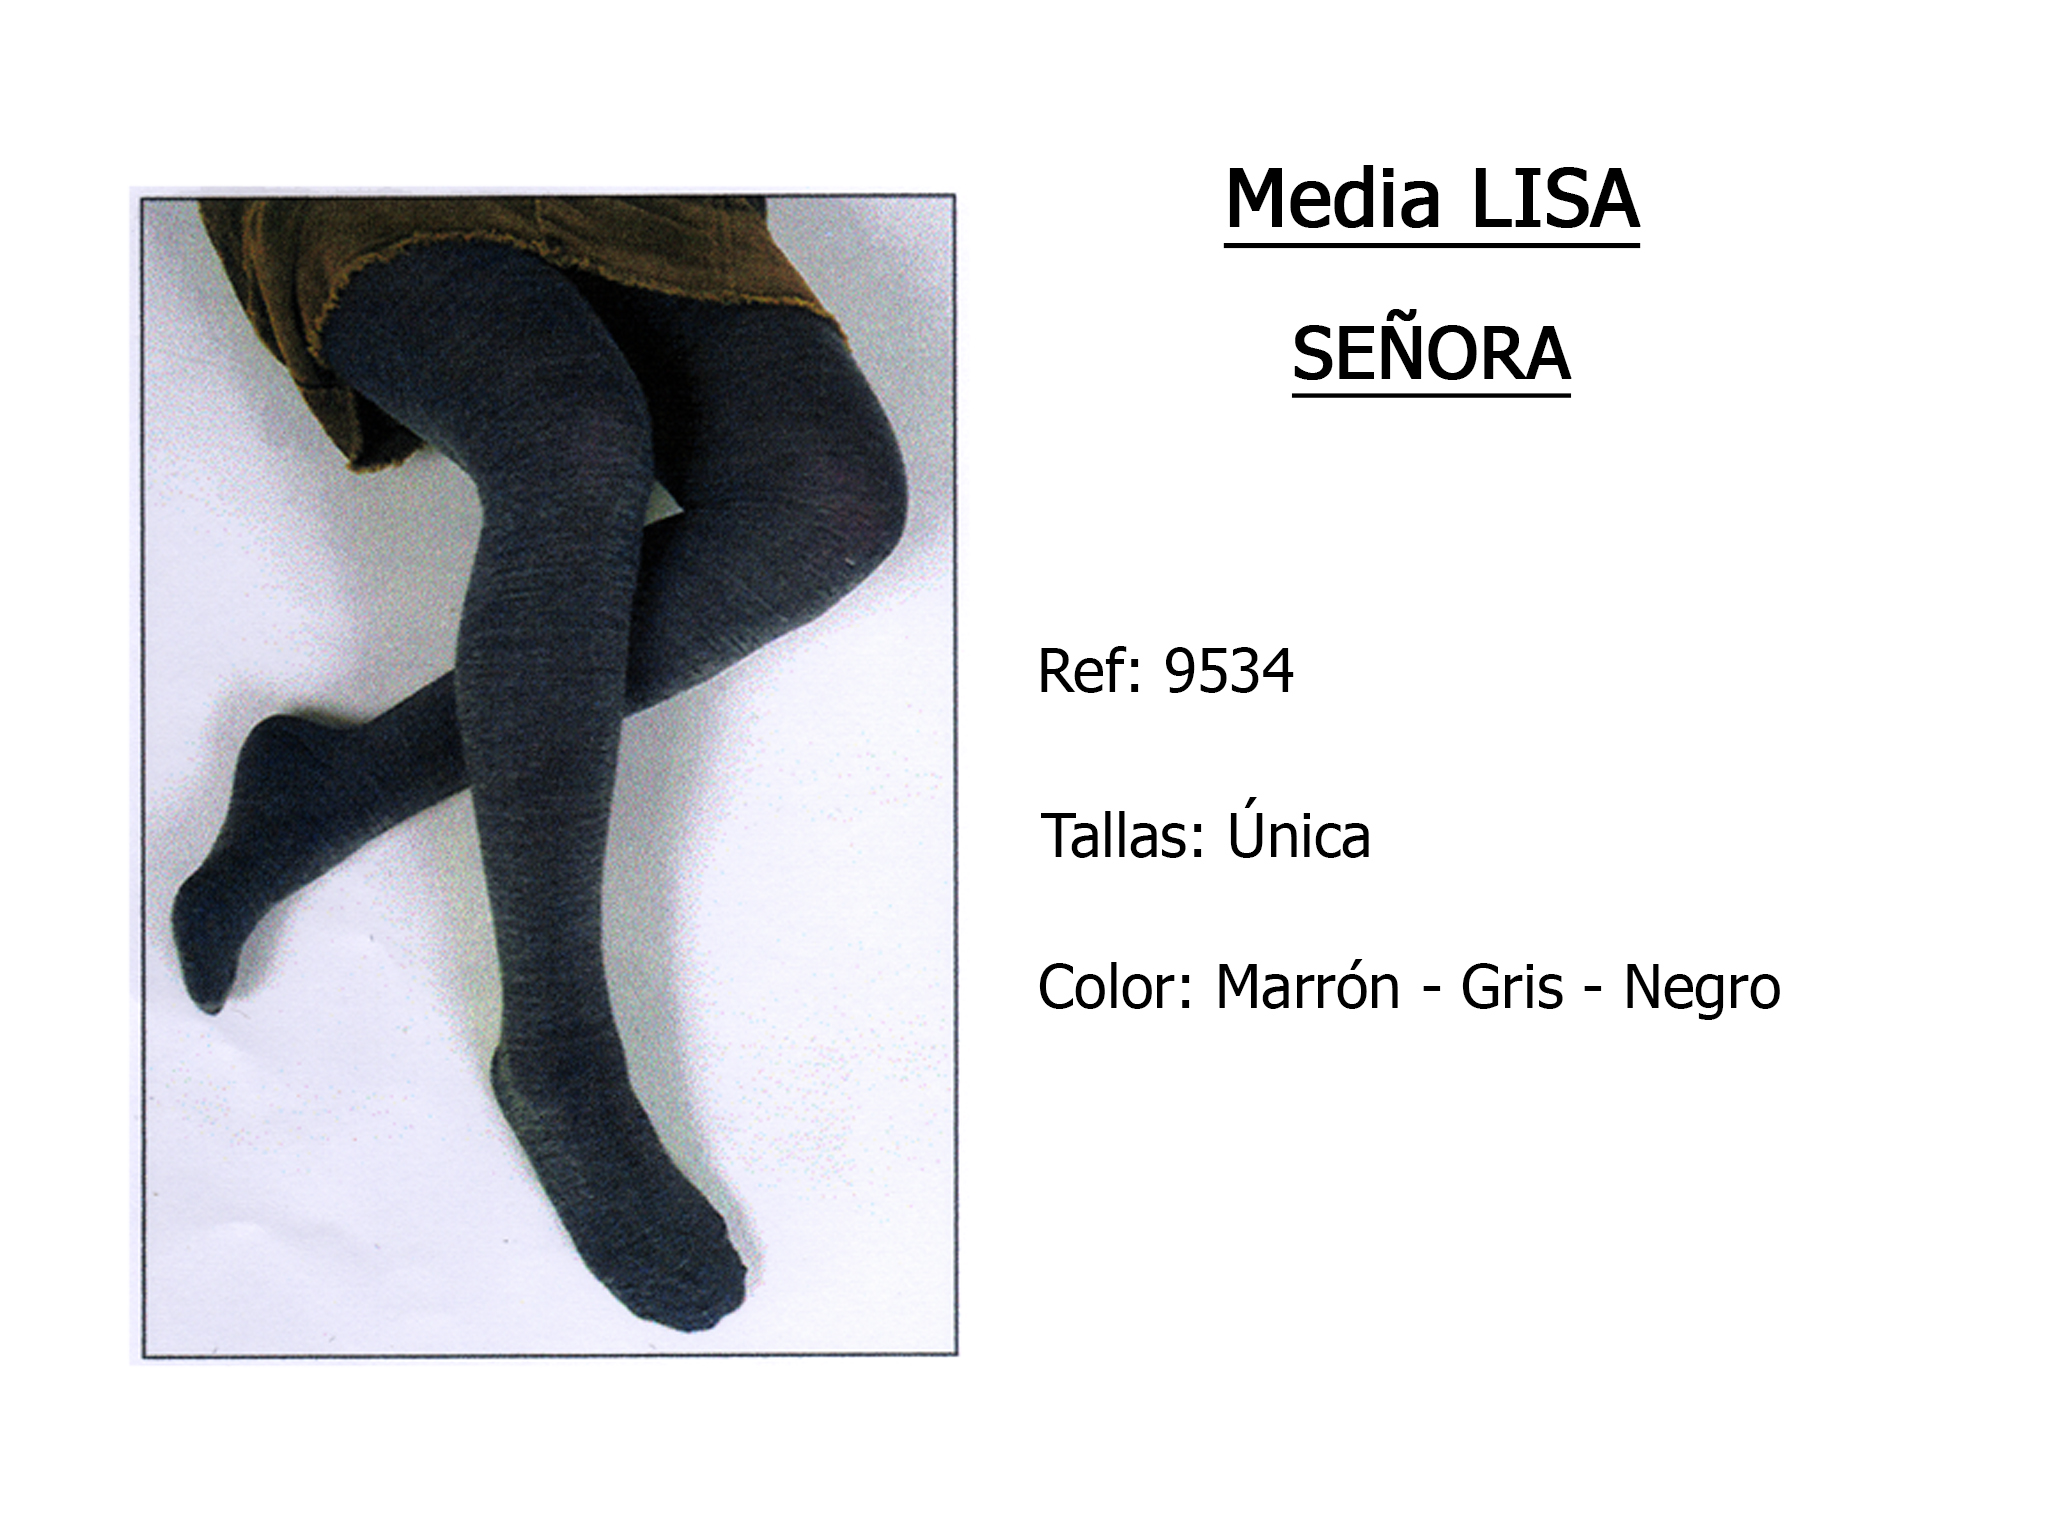 MEDIA lisa senora 9534